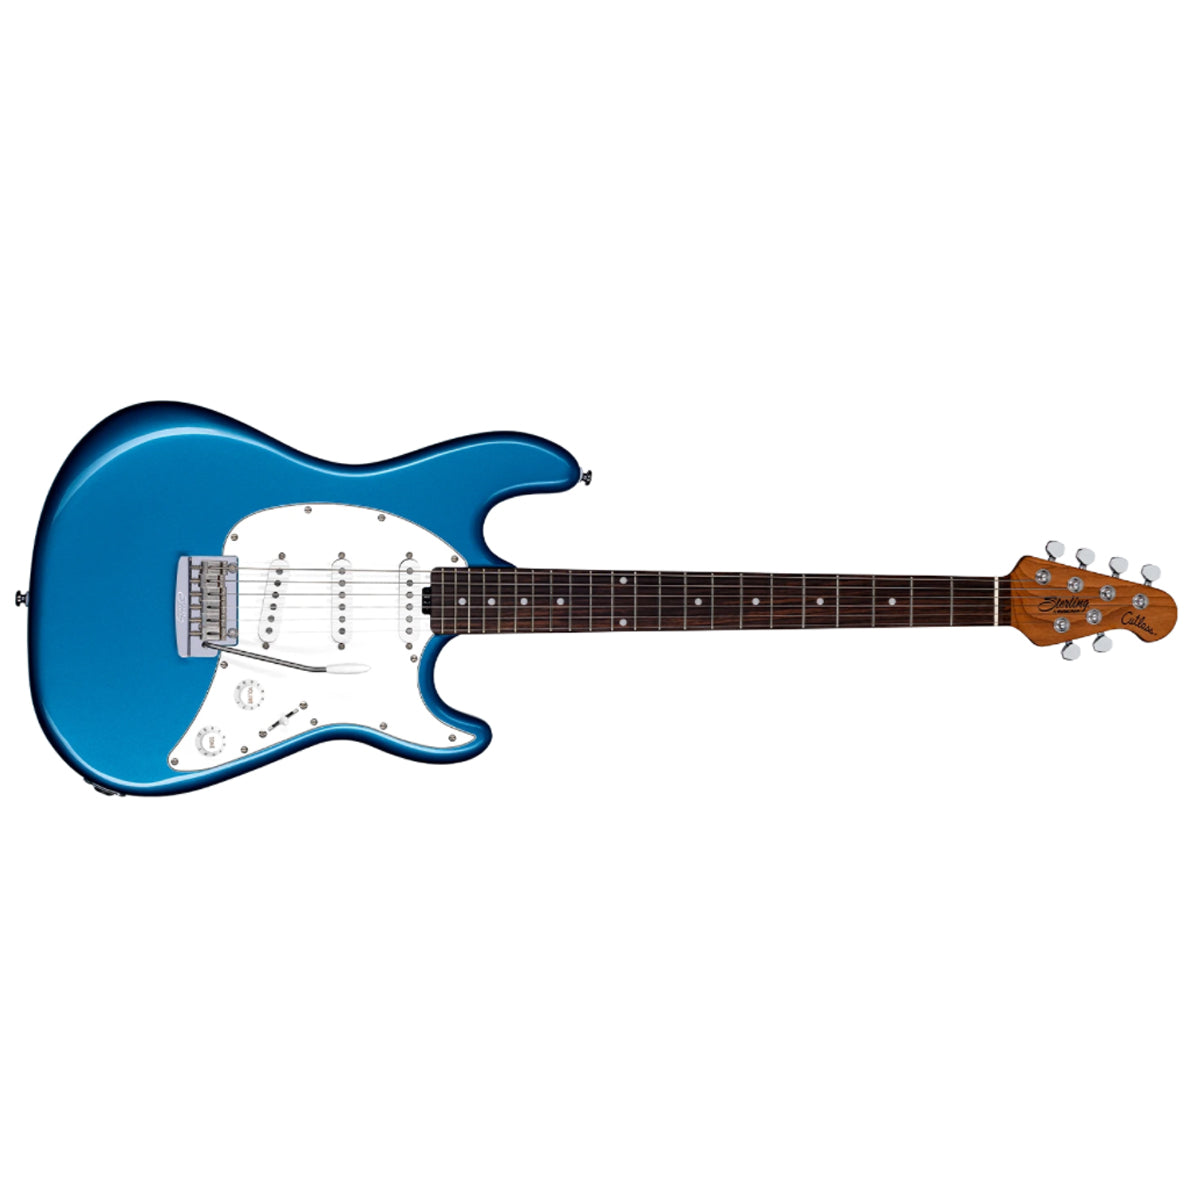 Sterling by Music Man Cutlass CT50SSS Electric Guitar Toluca Lake Blue